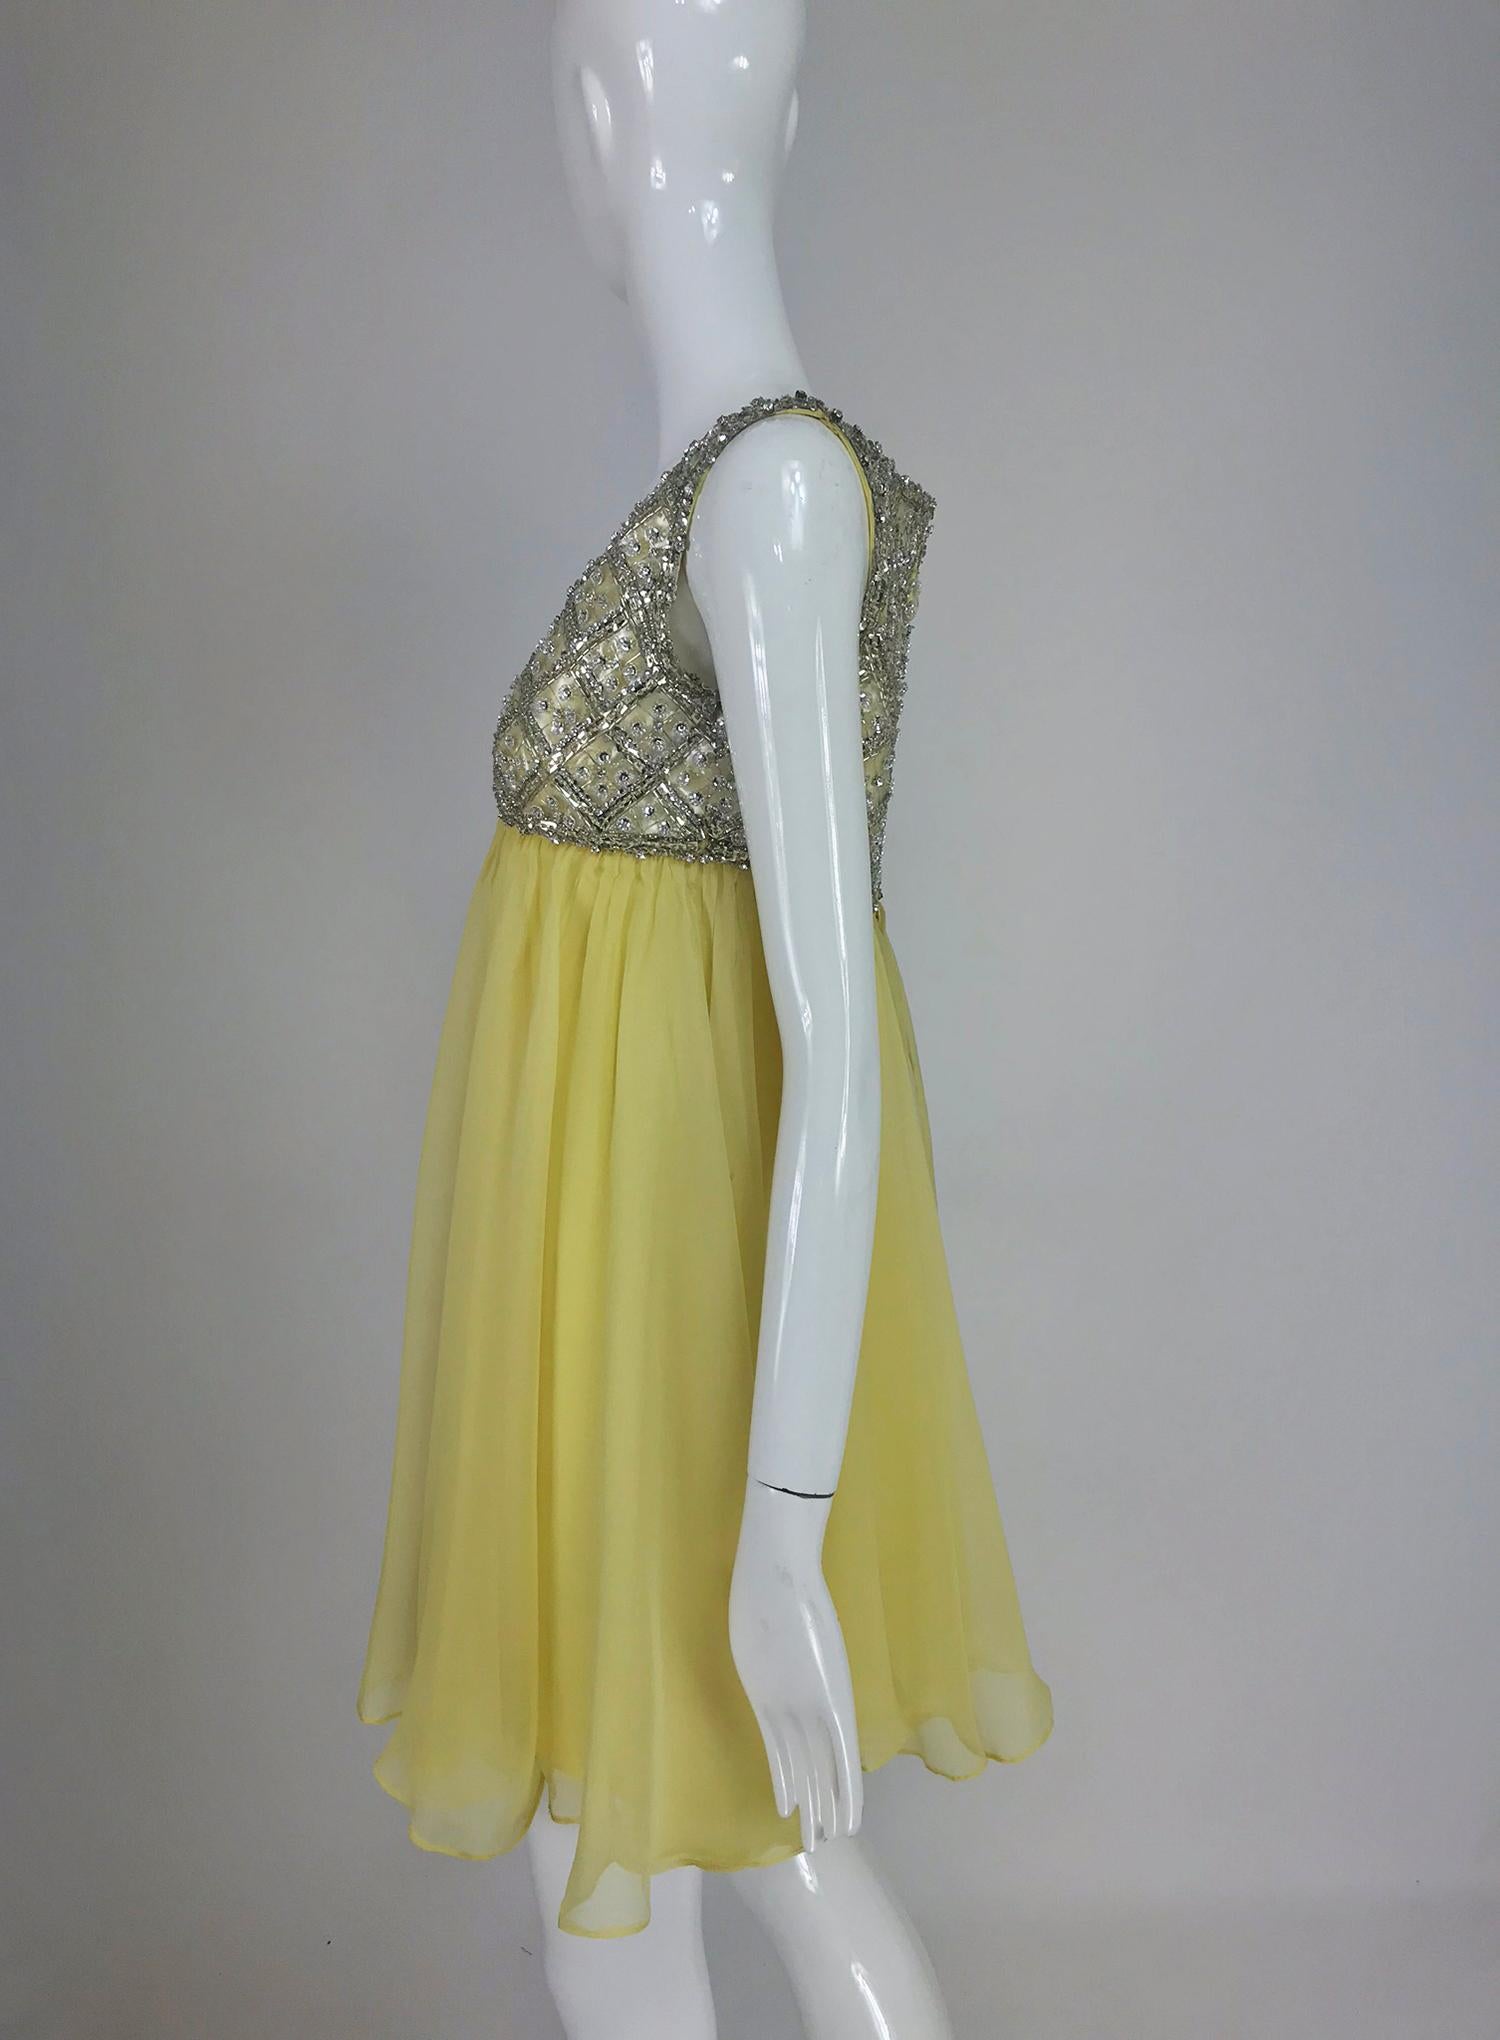 Women's Malcolm Starr Baby Doll dress rhinestones and Lemon Chiffon Silk 1960s